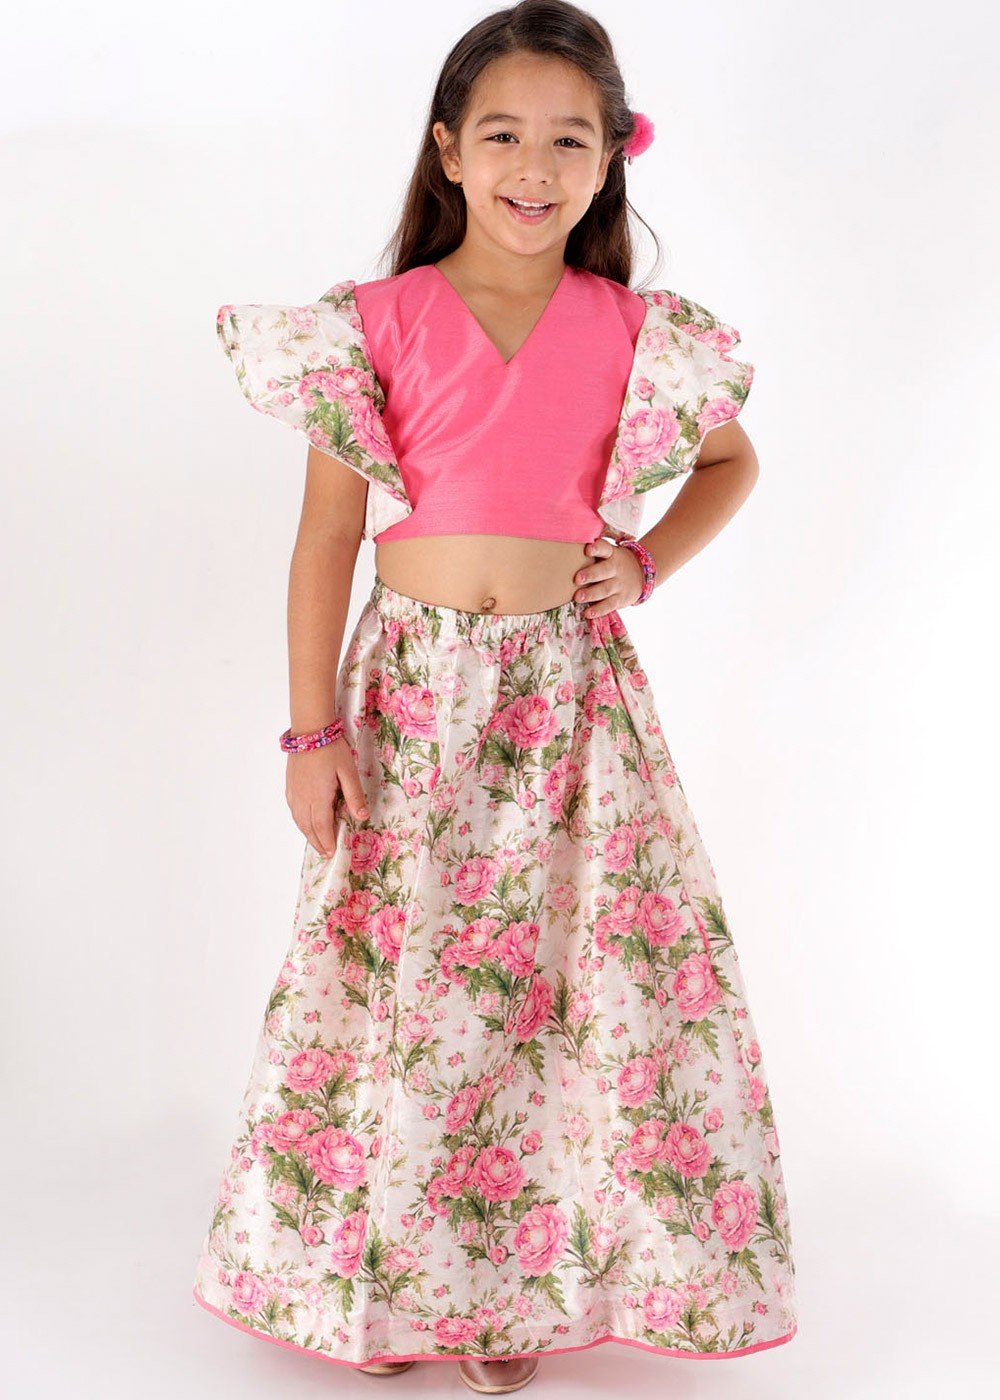 PEACH FLORAL PRINT, BEADS, SEQUINS AND BANARAS WORK LEHENGA CHOLI FOR GIRLS  | Kids designer dresses, Indian dresses for kids, Girls dresses sewing